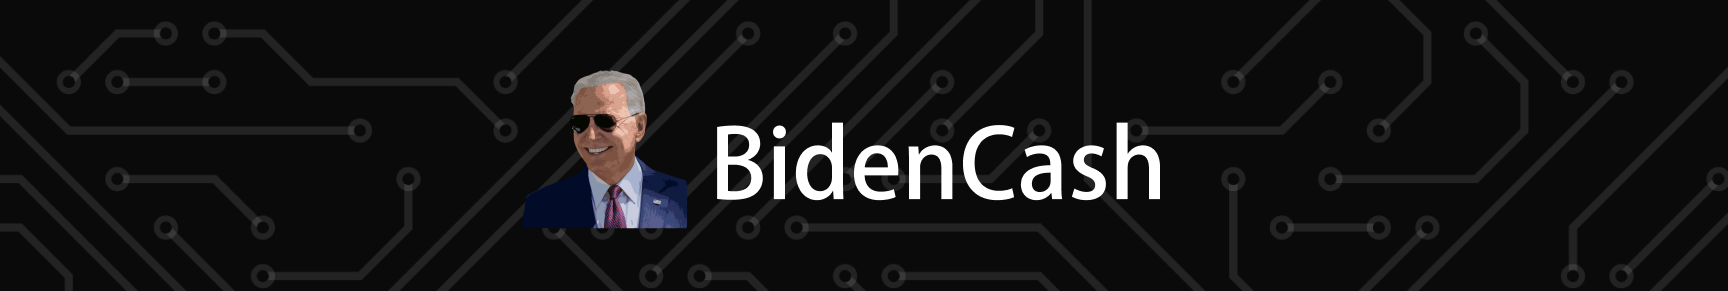 Brief Bio: BidenCash